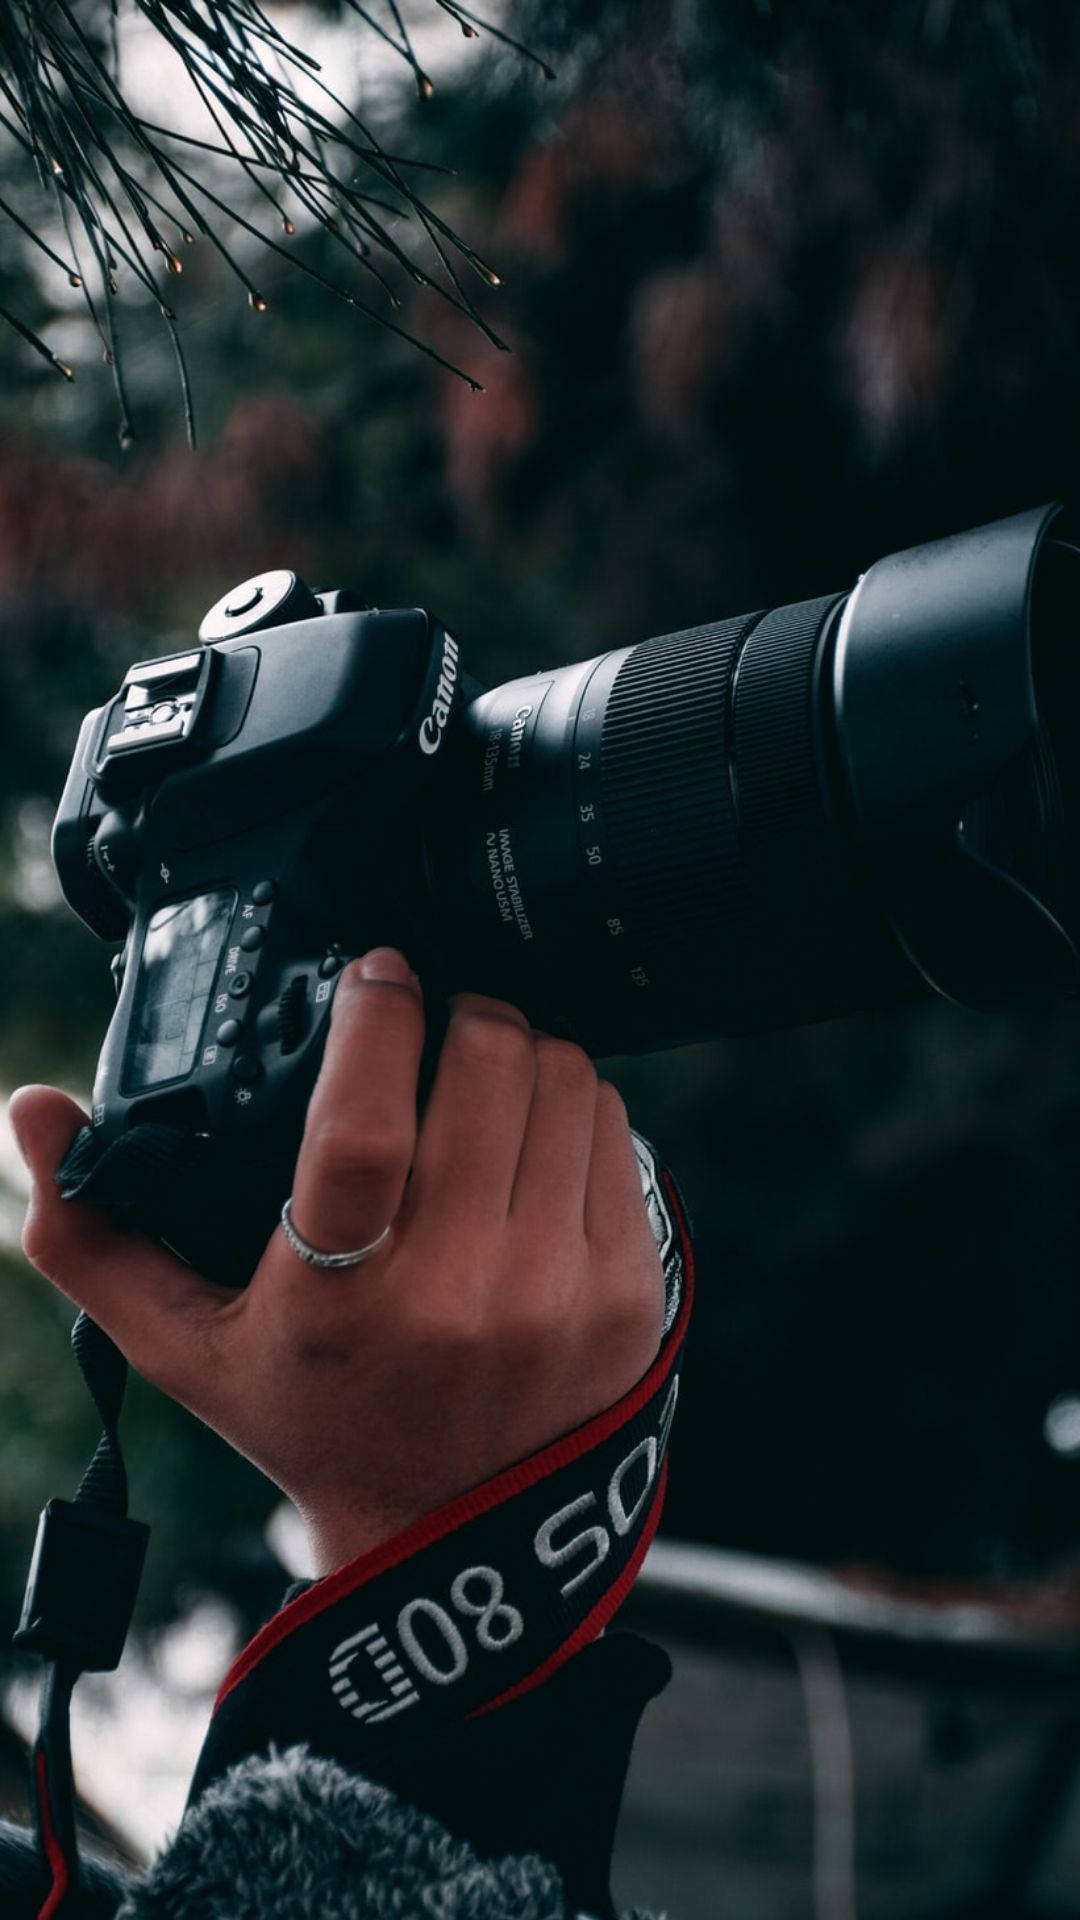 Photographer Holding A Camera